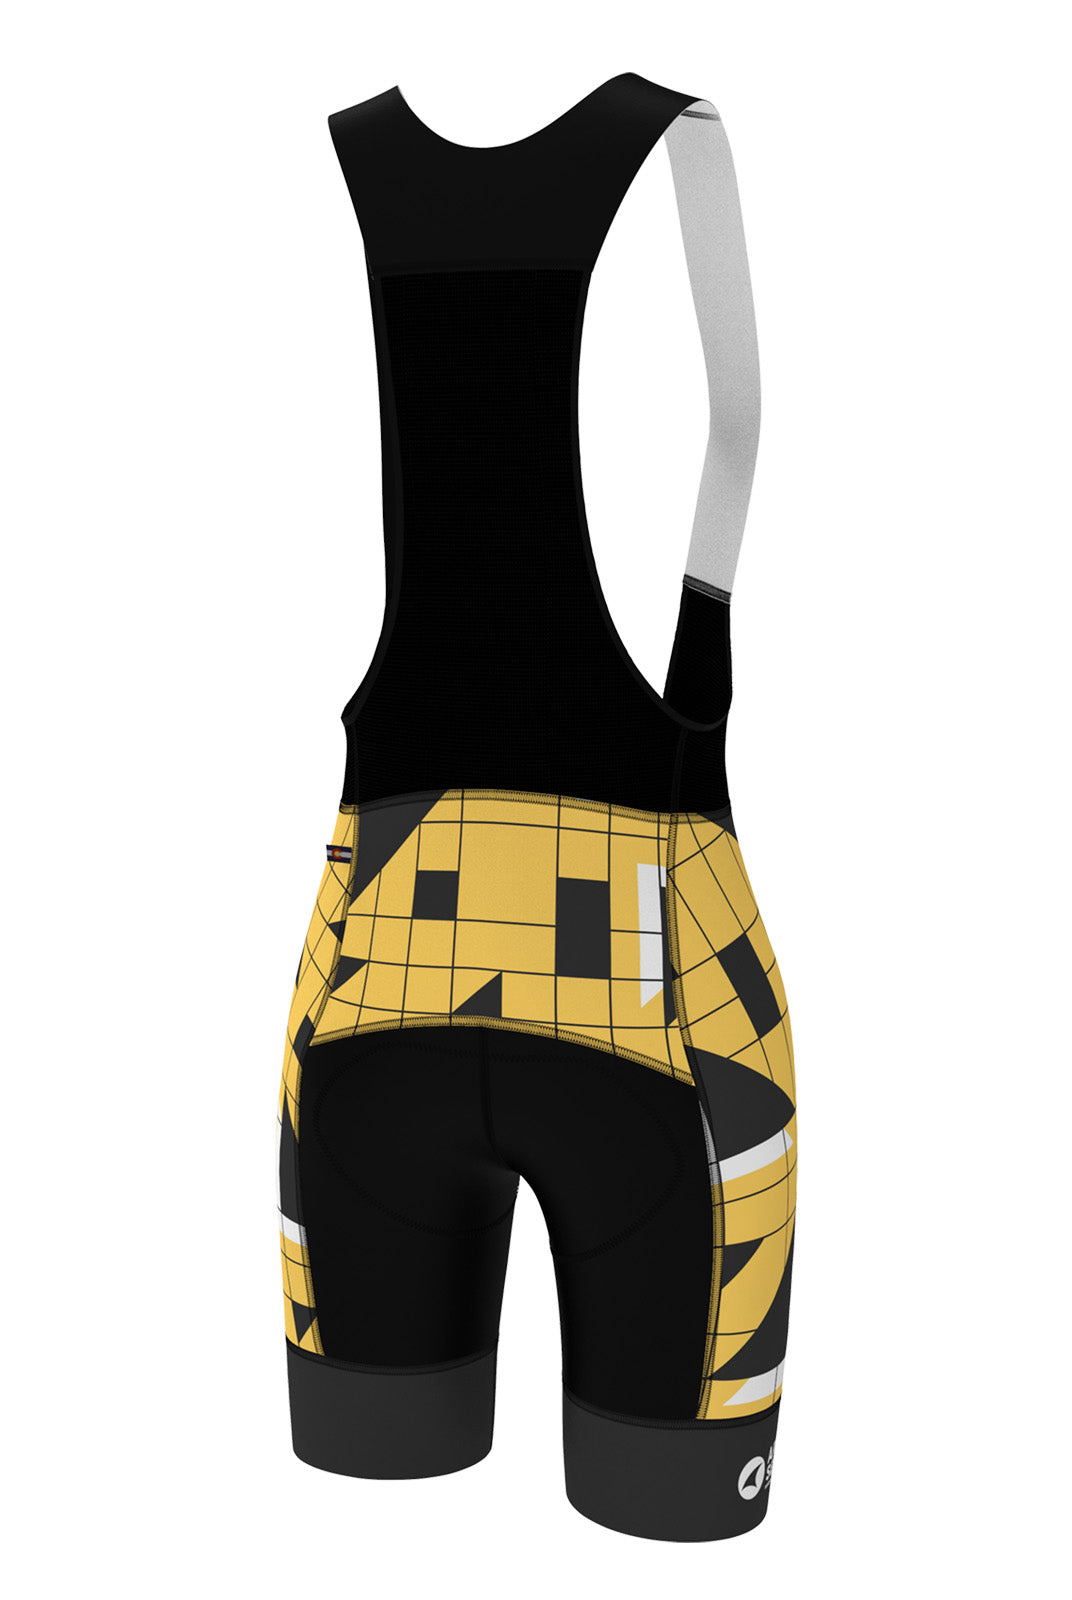 Women's Cycling Bib Shorts - Yellow Sandra Fettingis Design - Back View